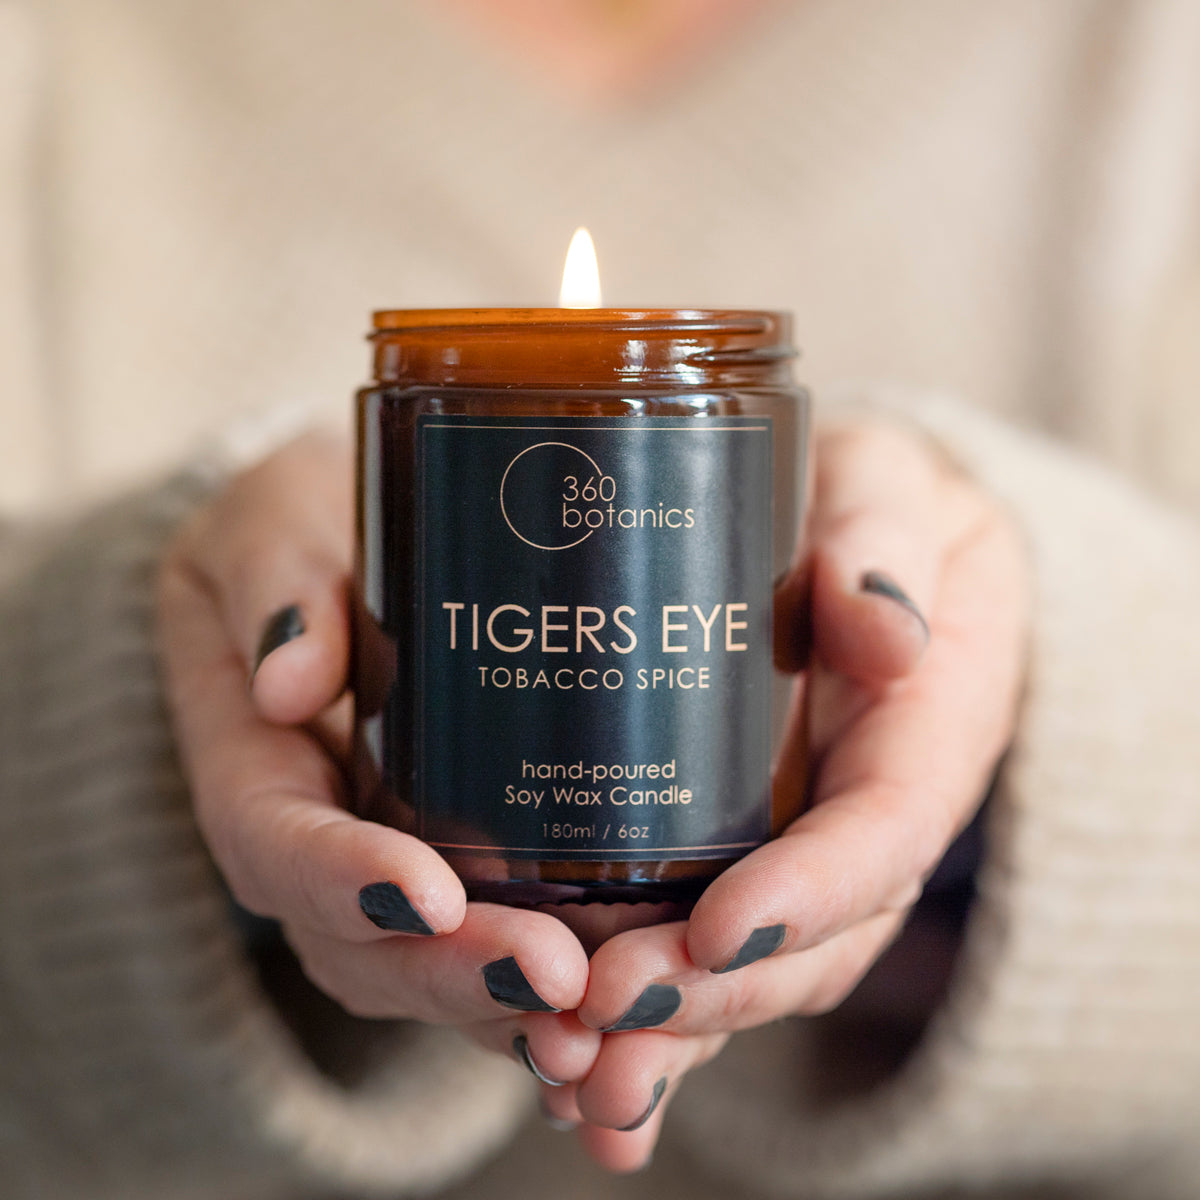 Tigers-eye candle in amber jar held between hands